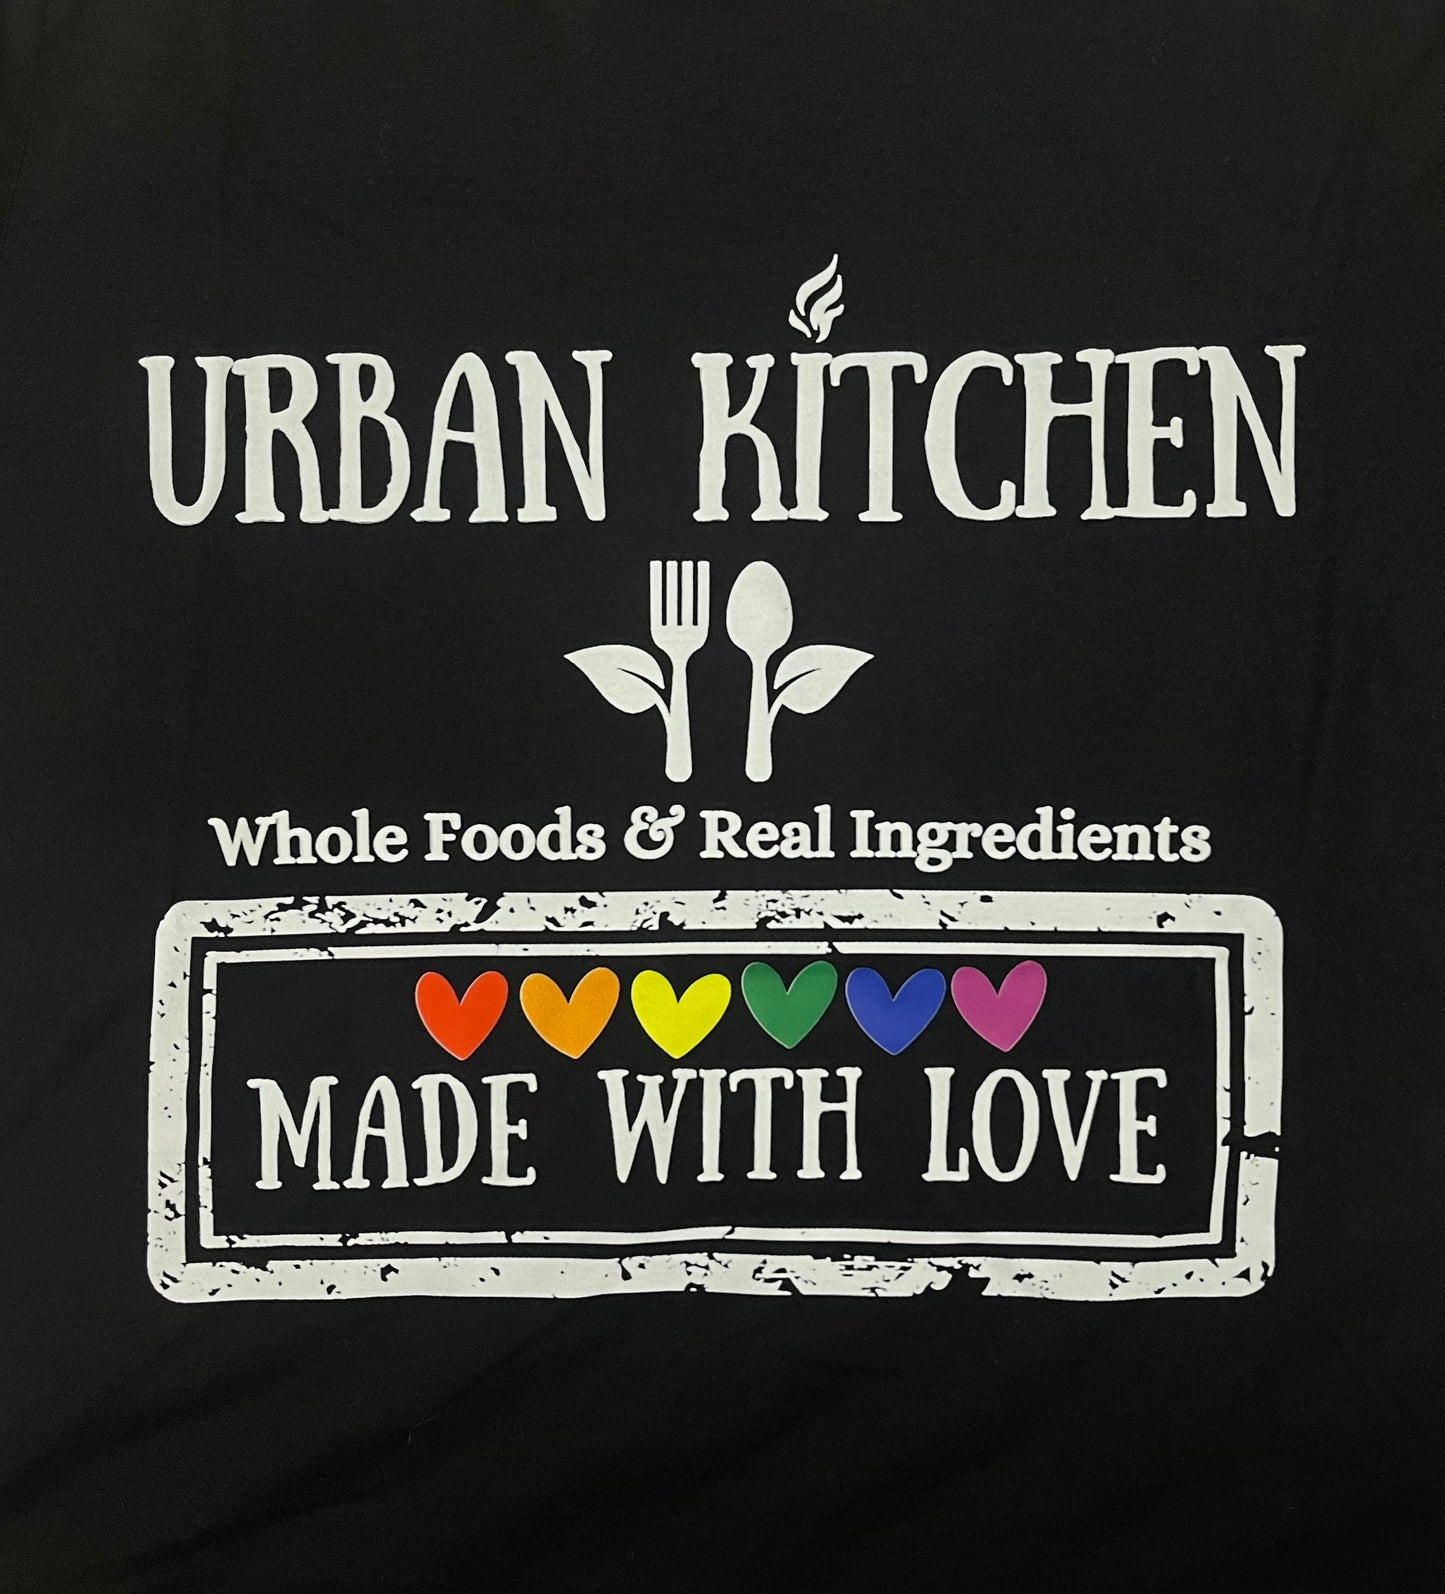 Urban Kitchen T Shirts